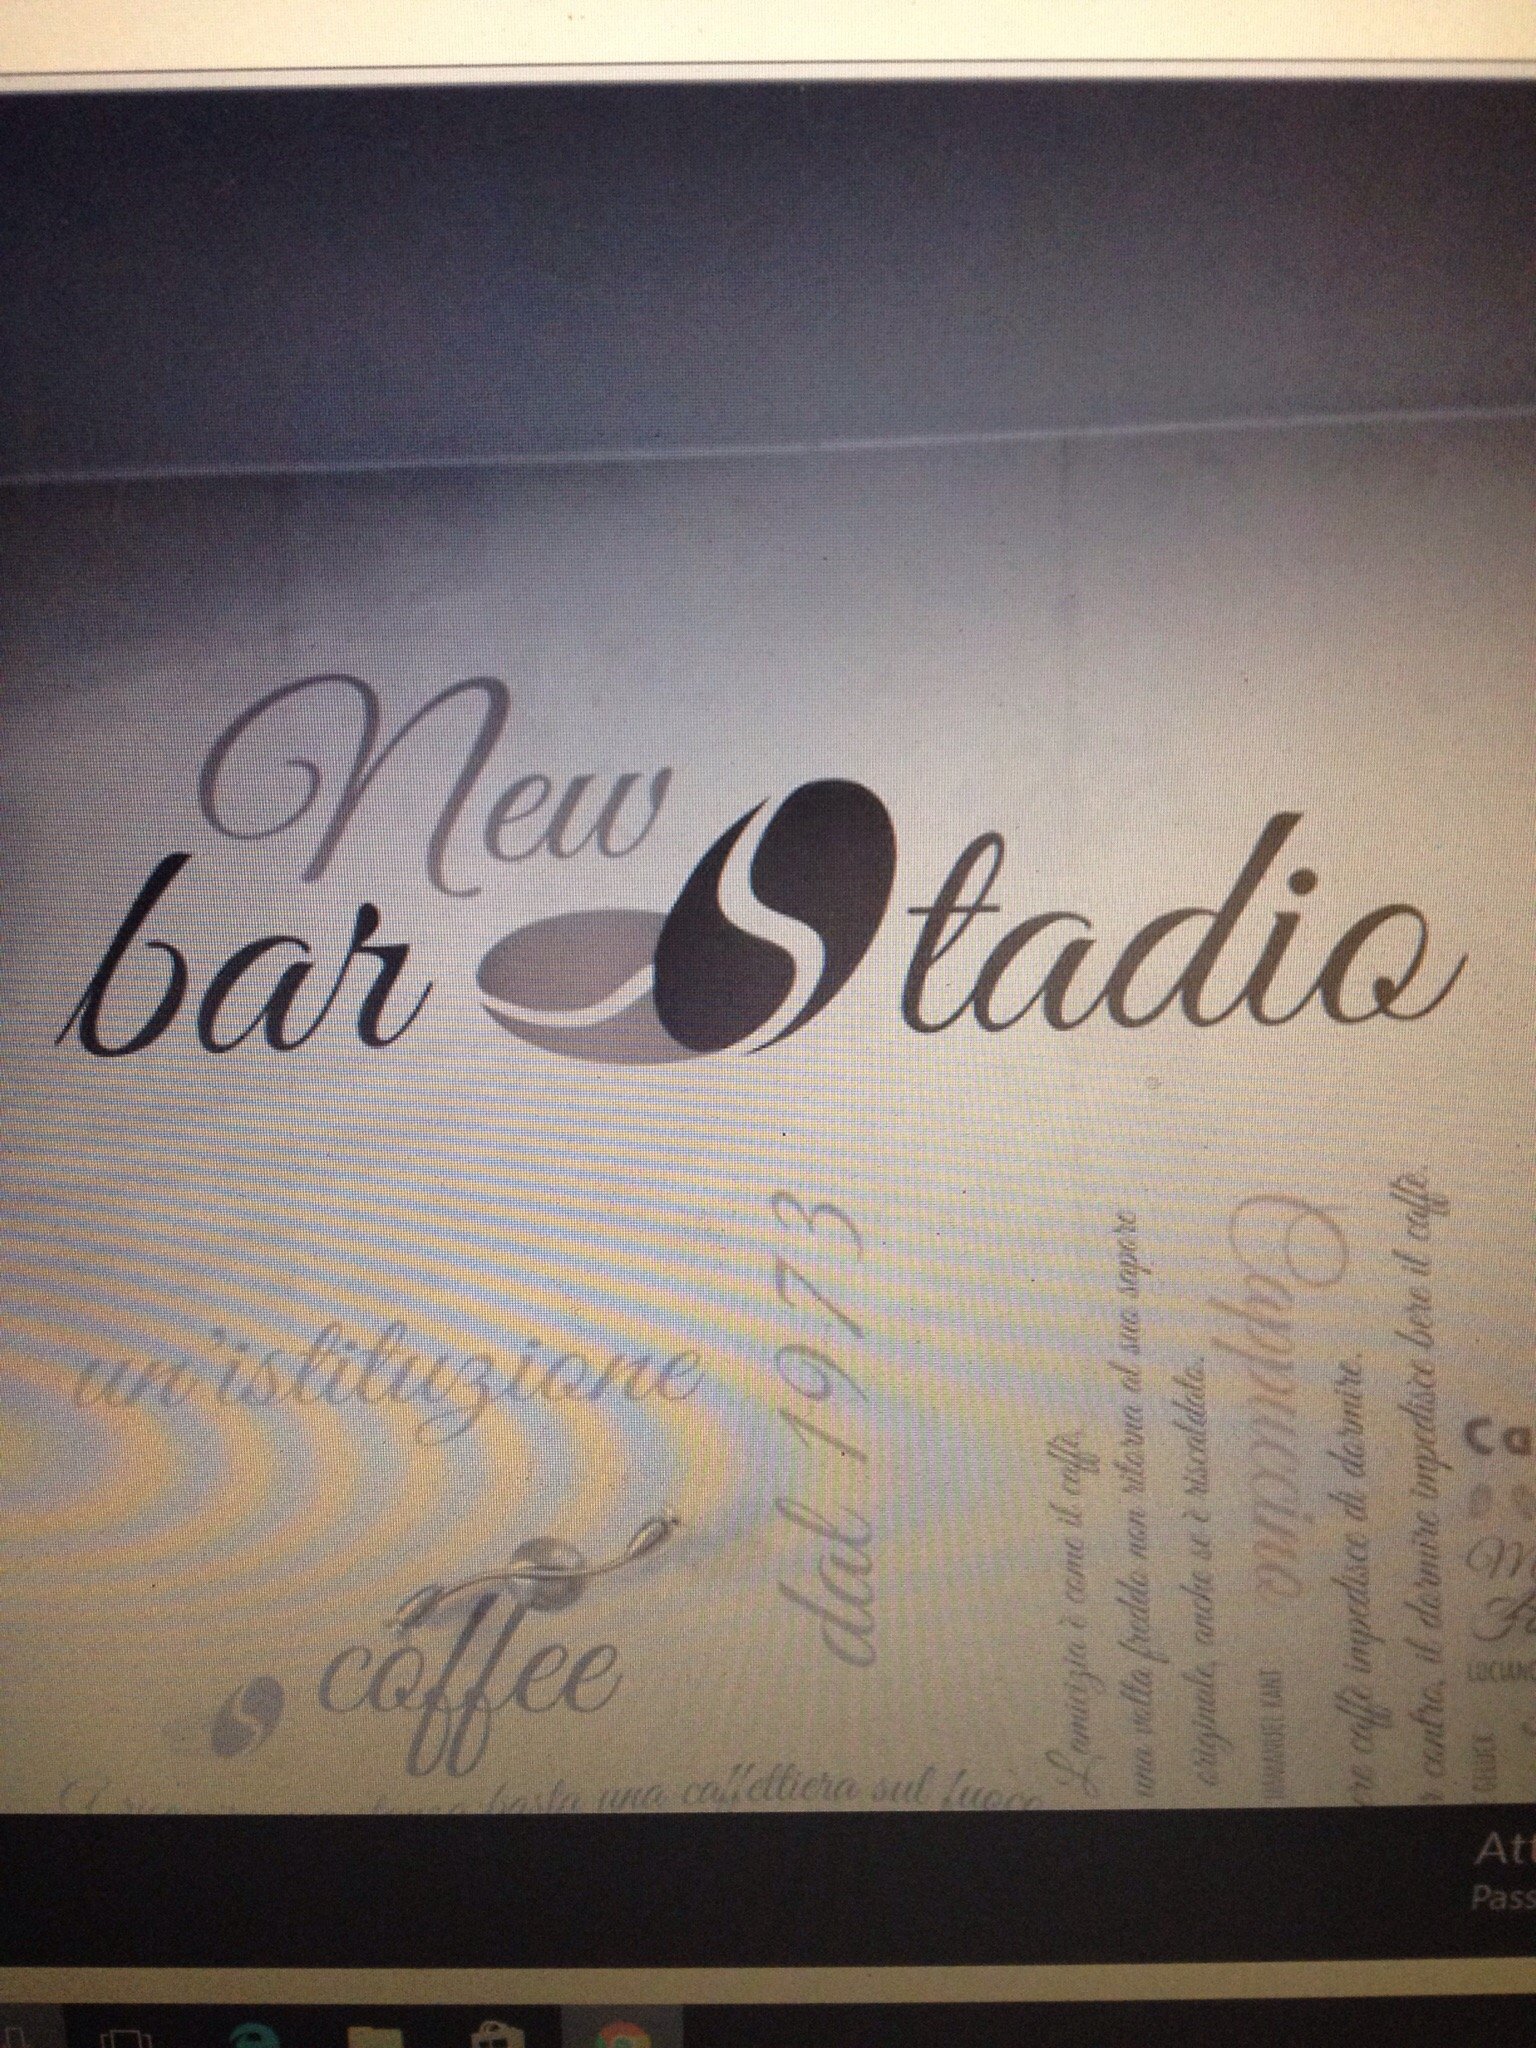 New Bar Stadio, Salerno